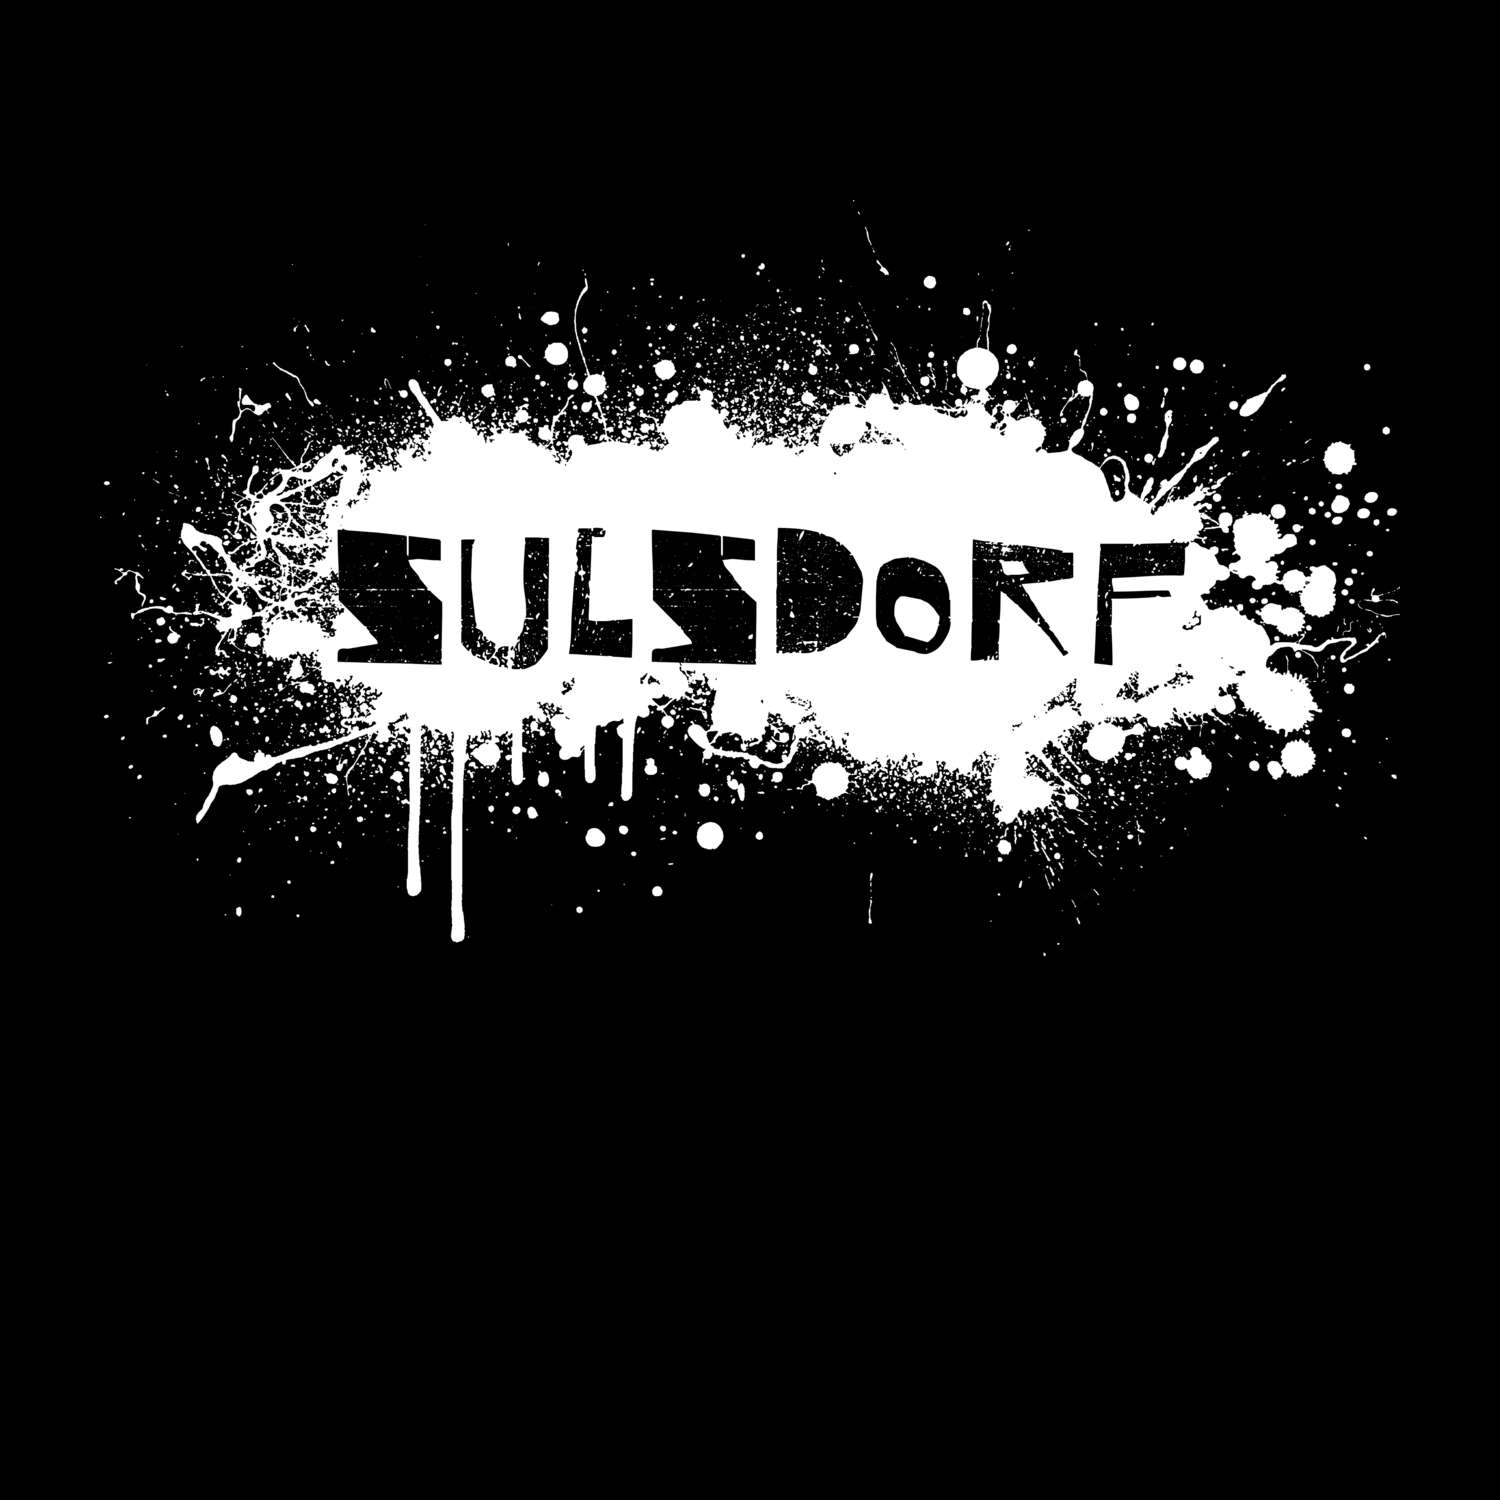 Sulsdorf T-Shirt »Paint Splash Punk«